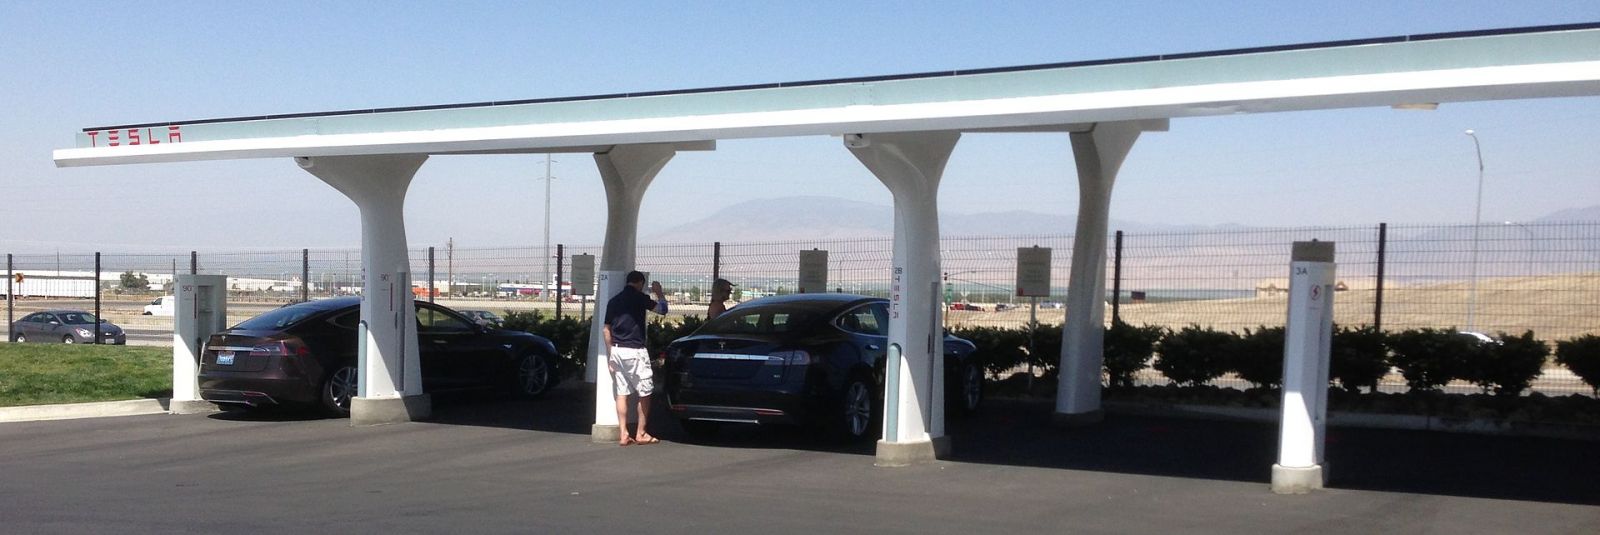 Tesla_charging_station_with_solar_collector_trimmed.jpeg.jpeg